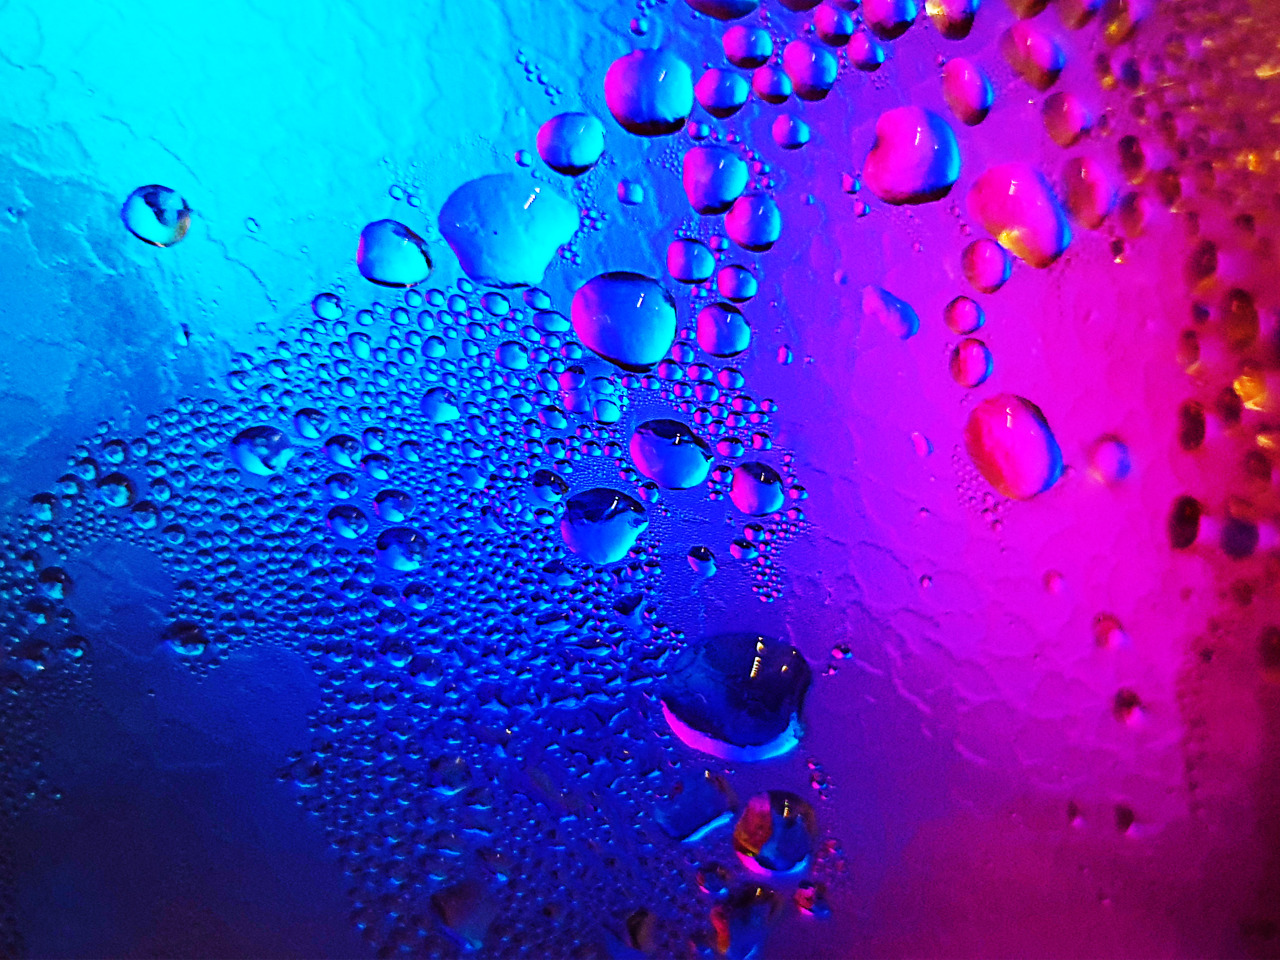 cold glass #purple#blue#water#rain#neon#glow#aesthetic#original